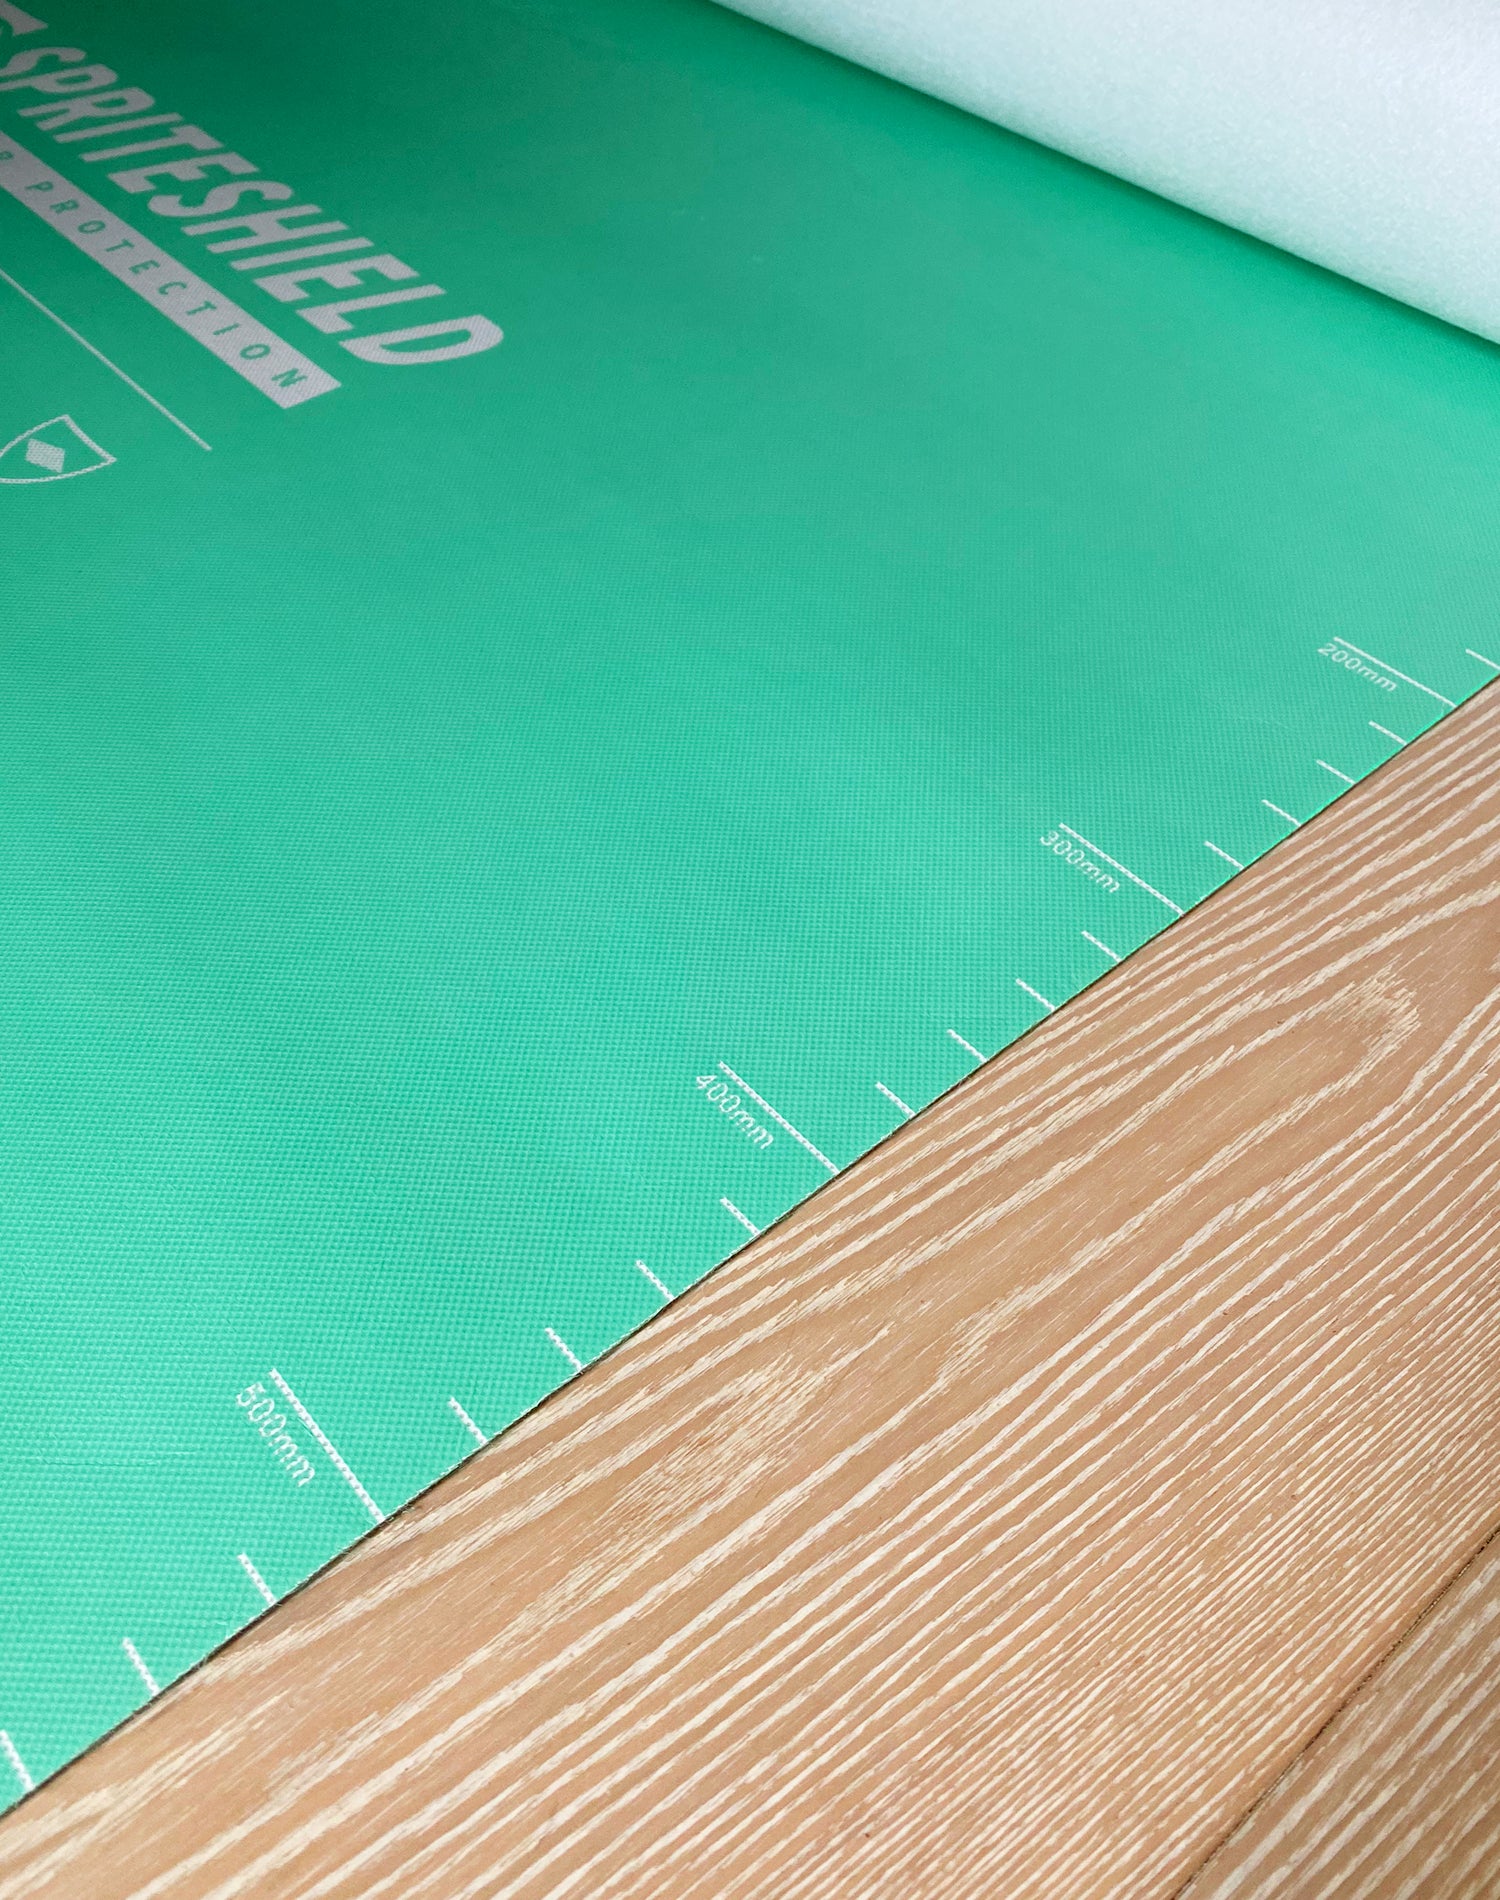 Spriteshield Floor Protection Scale Details